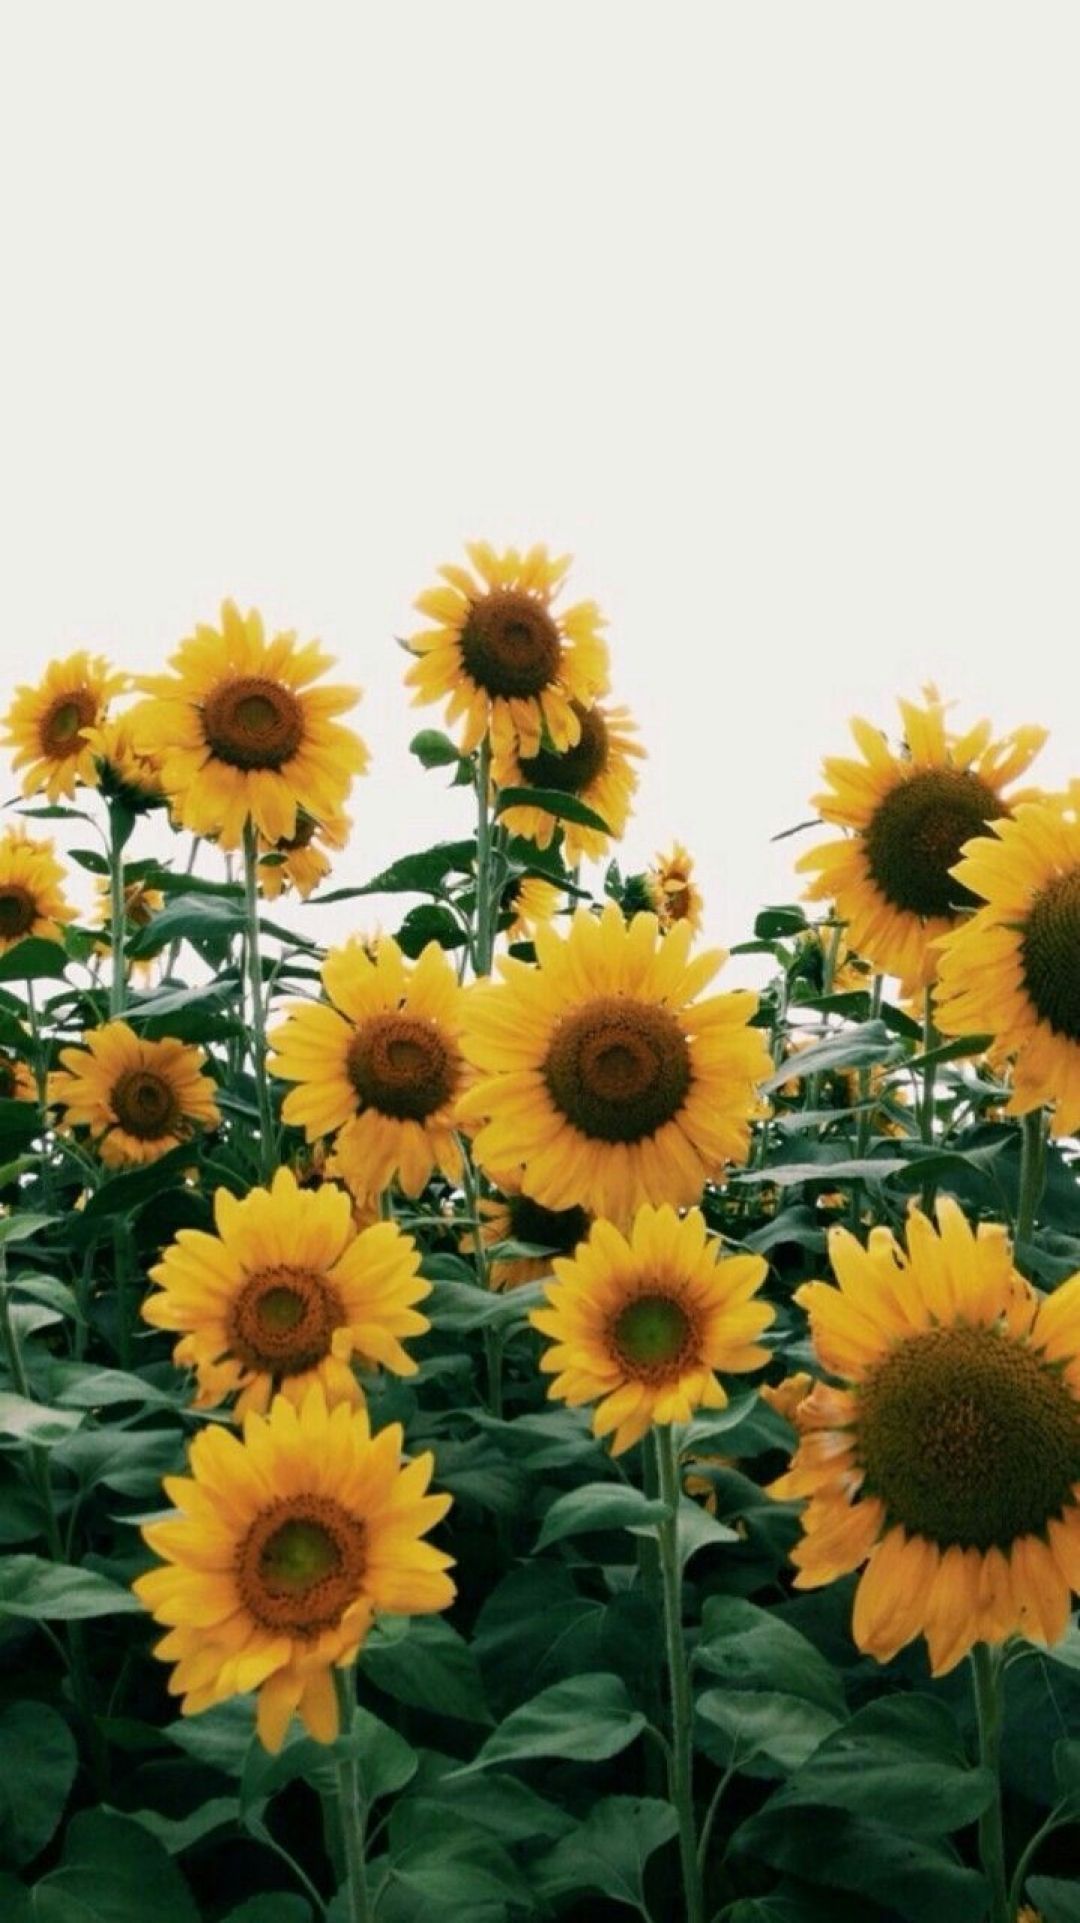 Yellow Aesthetic Sunflowers Image, HD Photo 1080p